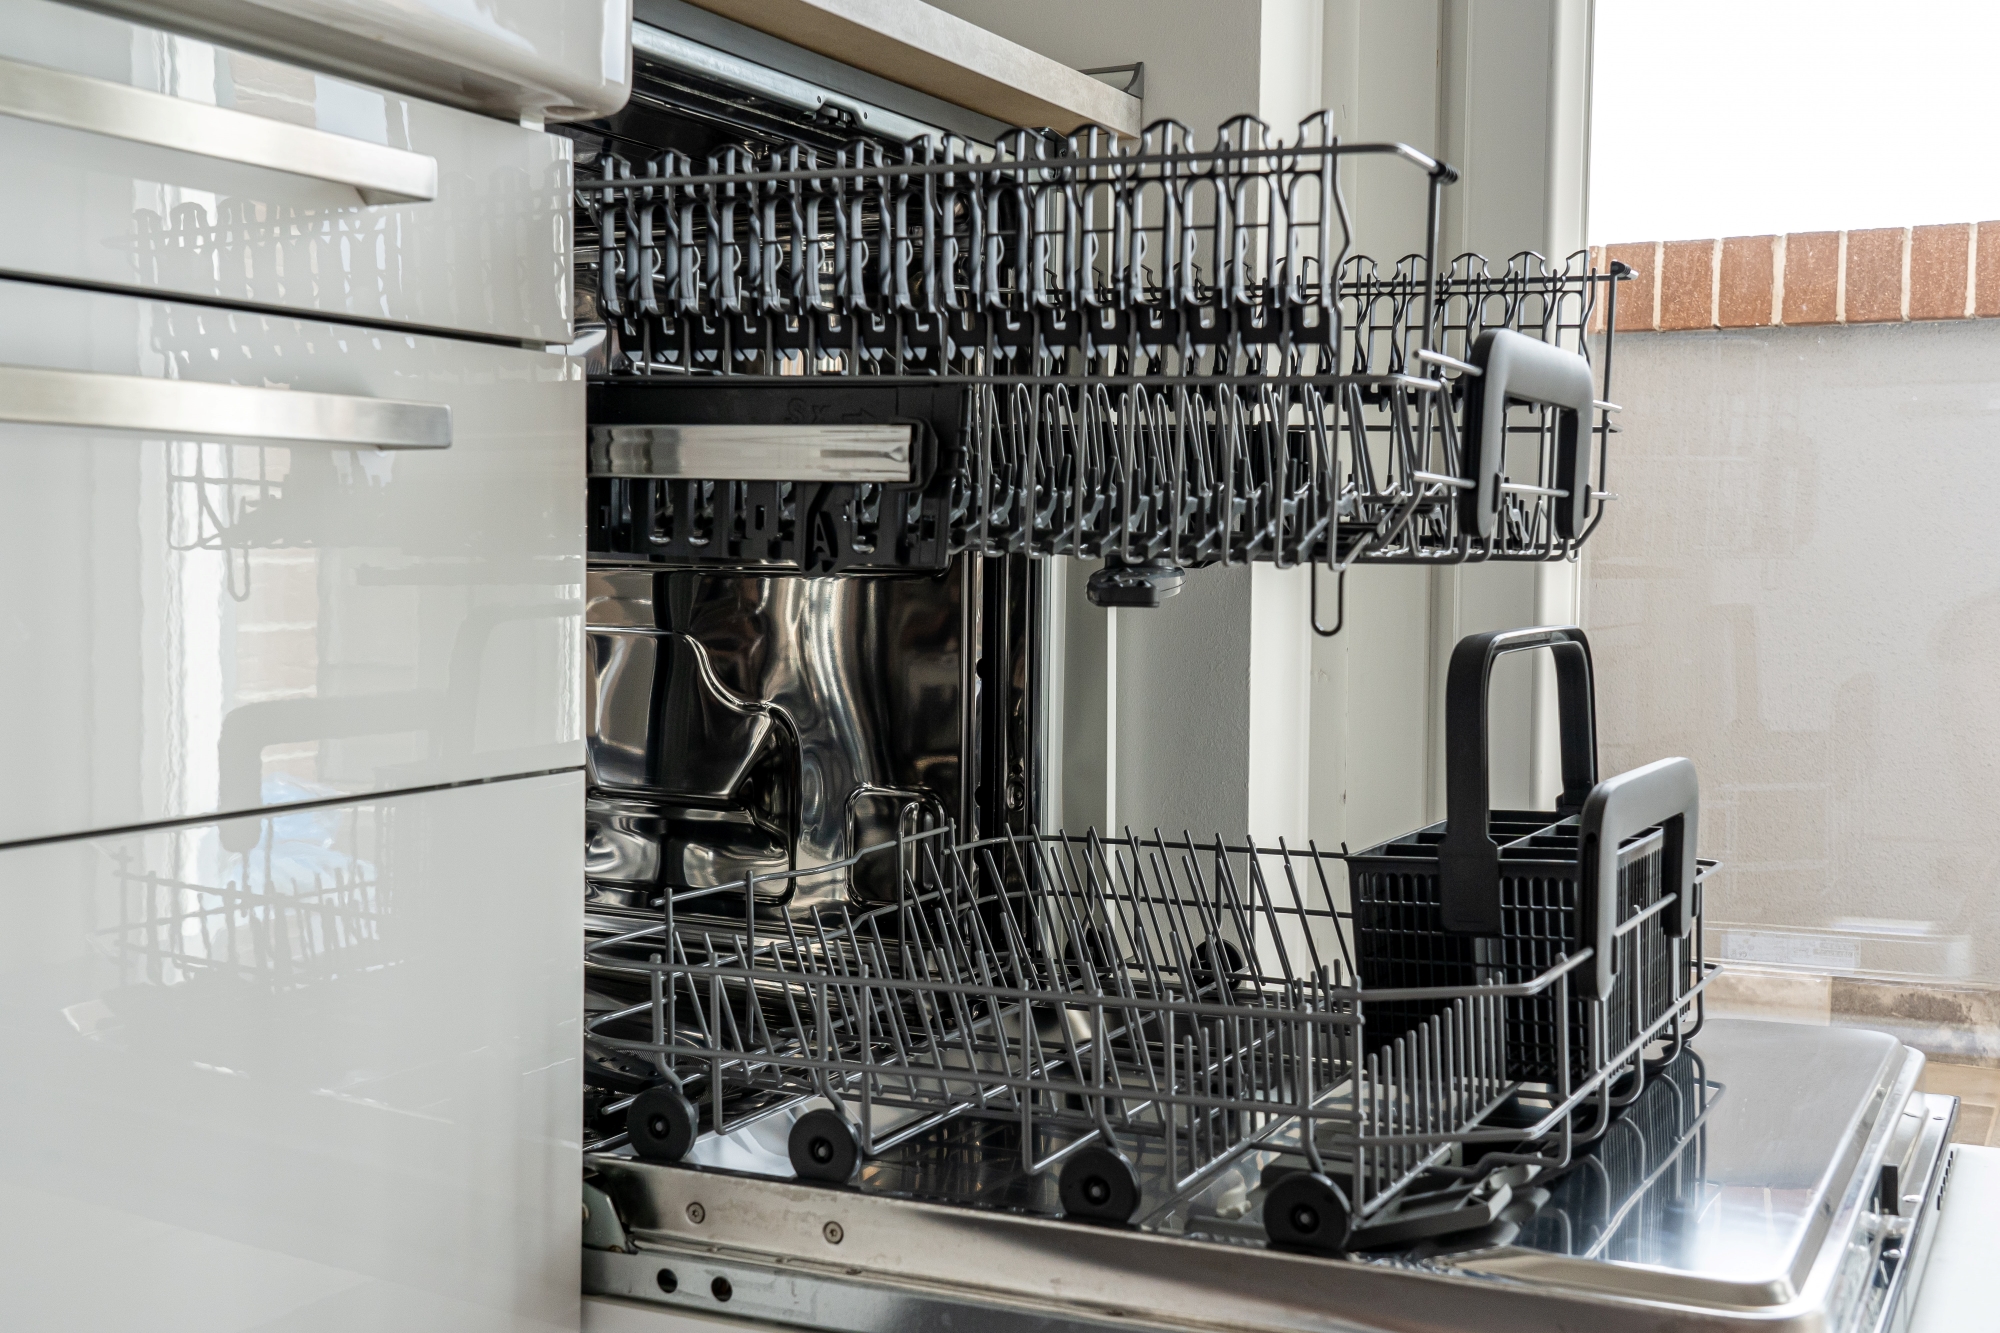 The Best Dishwasher Hacks